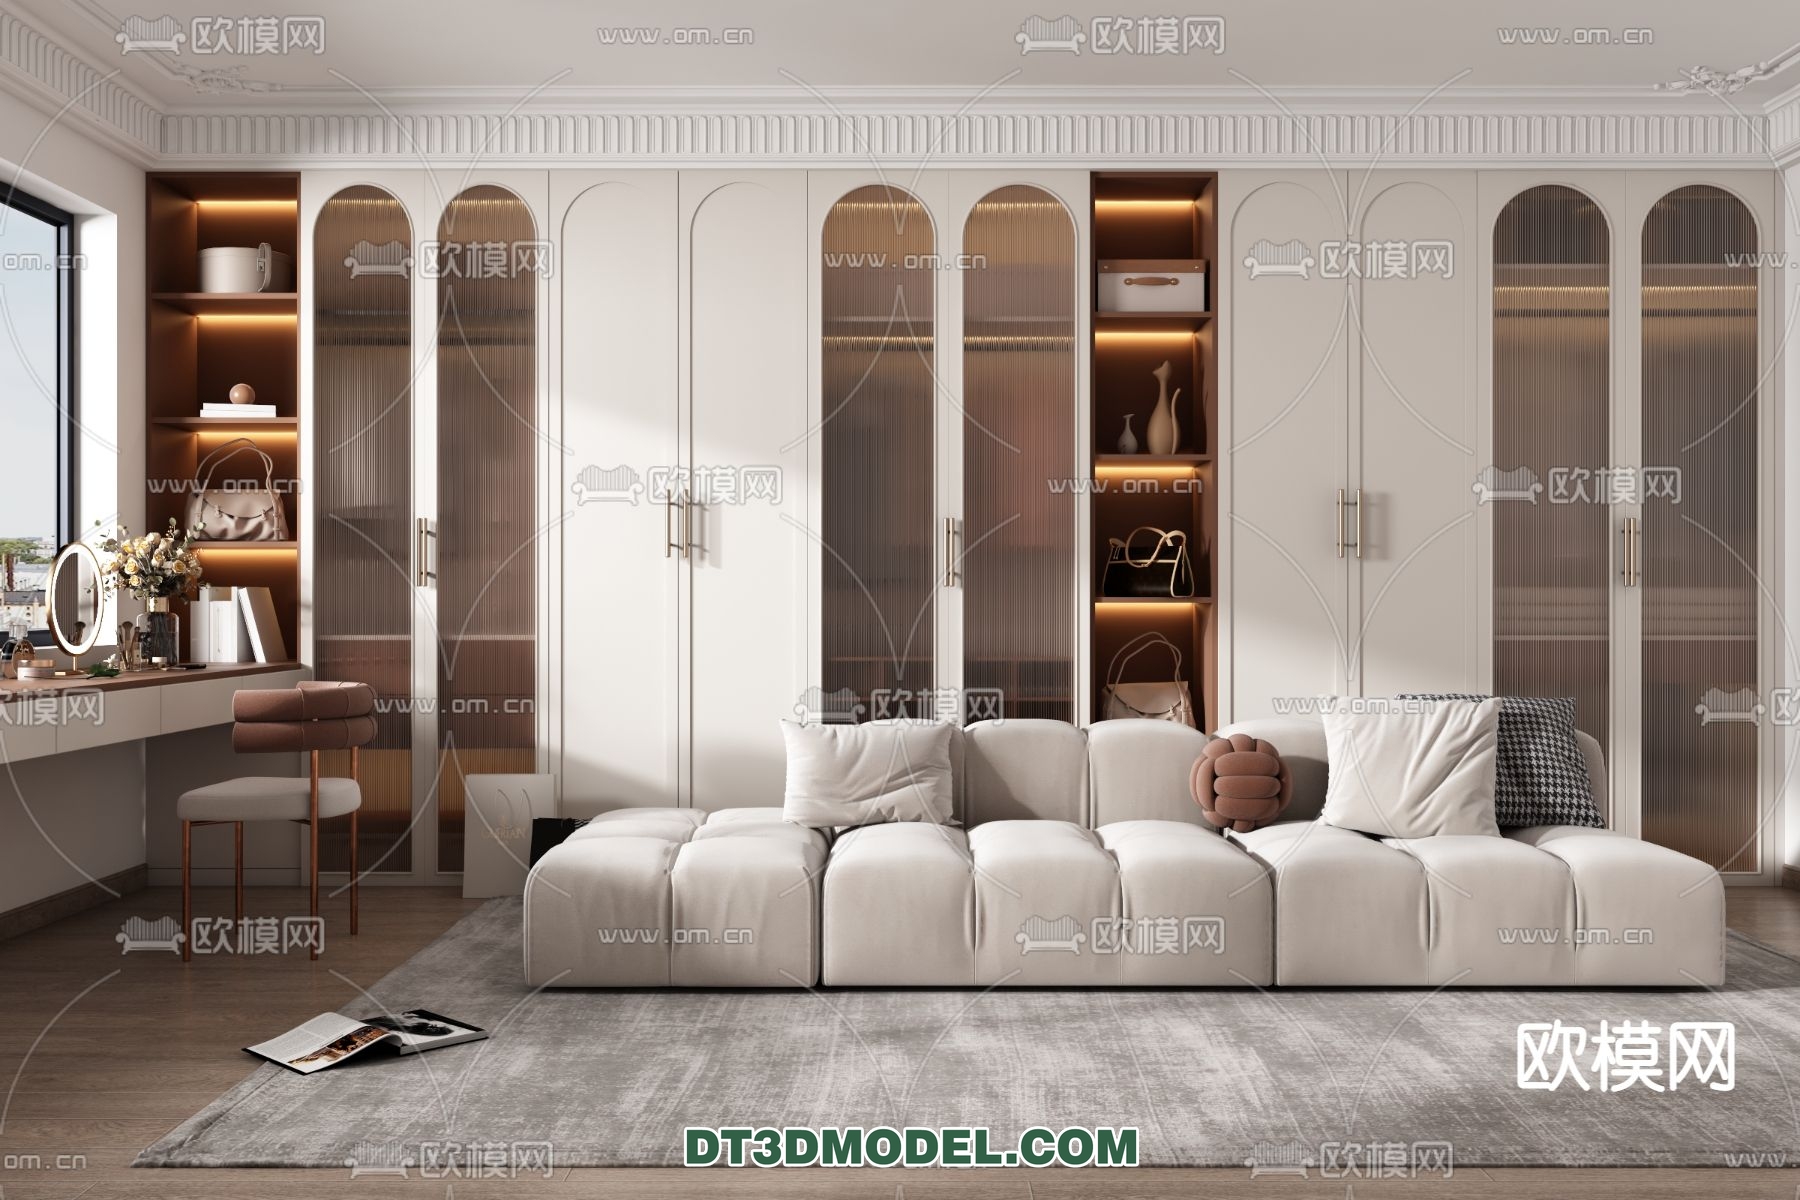 CLOSET ROOM – VRAY / CORONA – 3D MODEL – 2408 - thumbnail 1